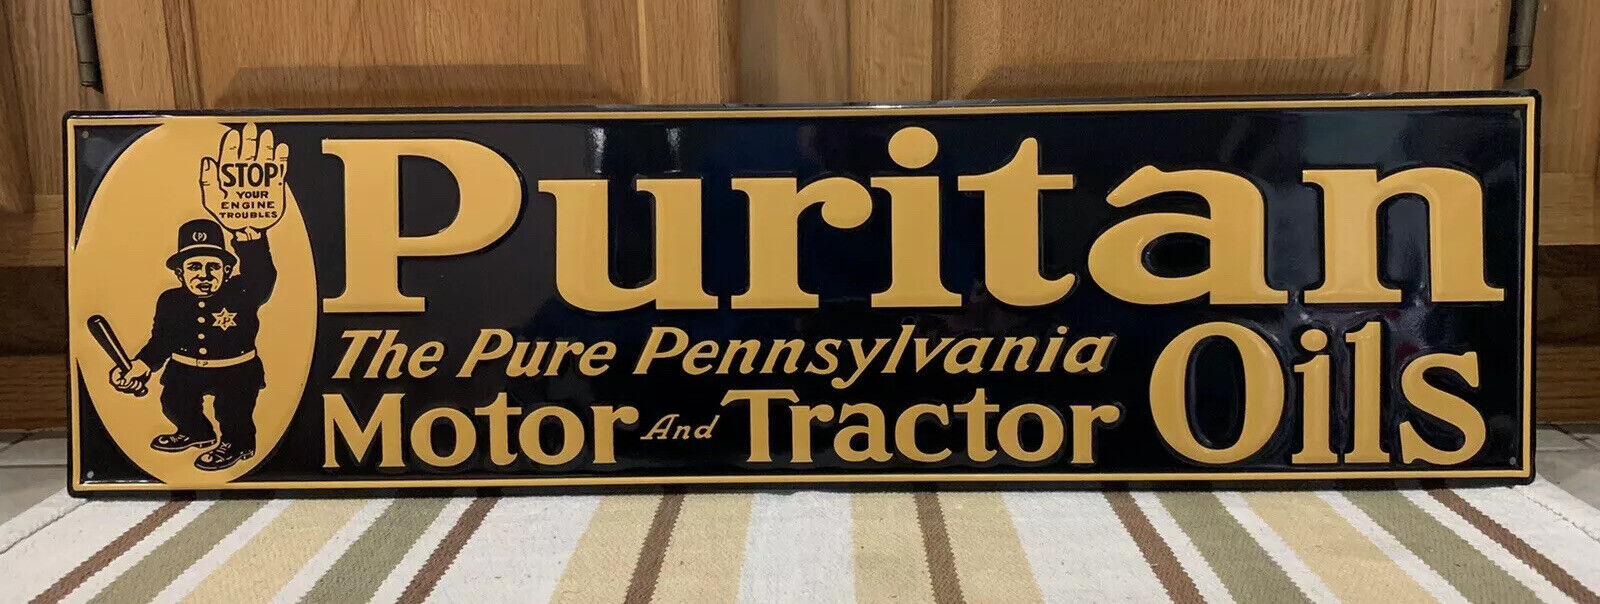 Puritan Motor Tractor Oils Metal Sign Cop Garage Gas Vintage Style Wall Decor